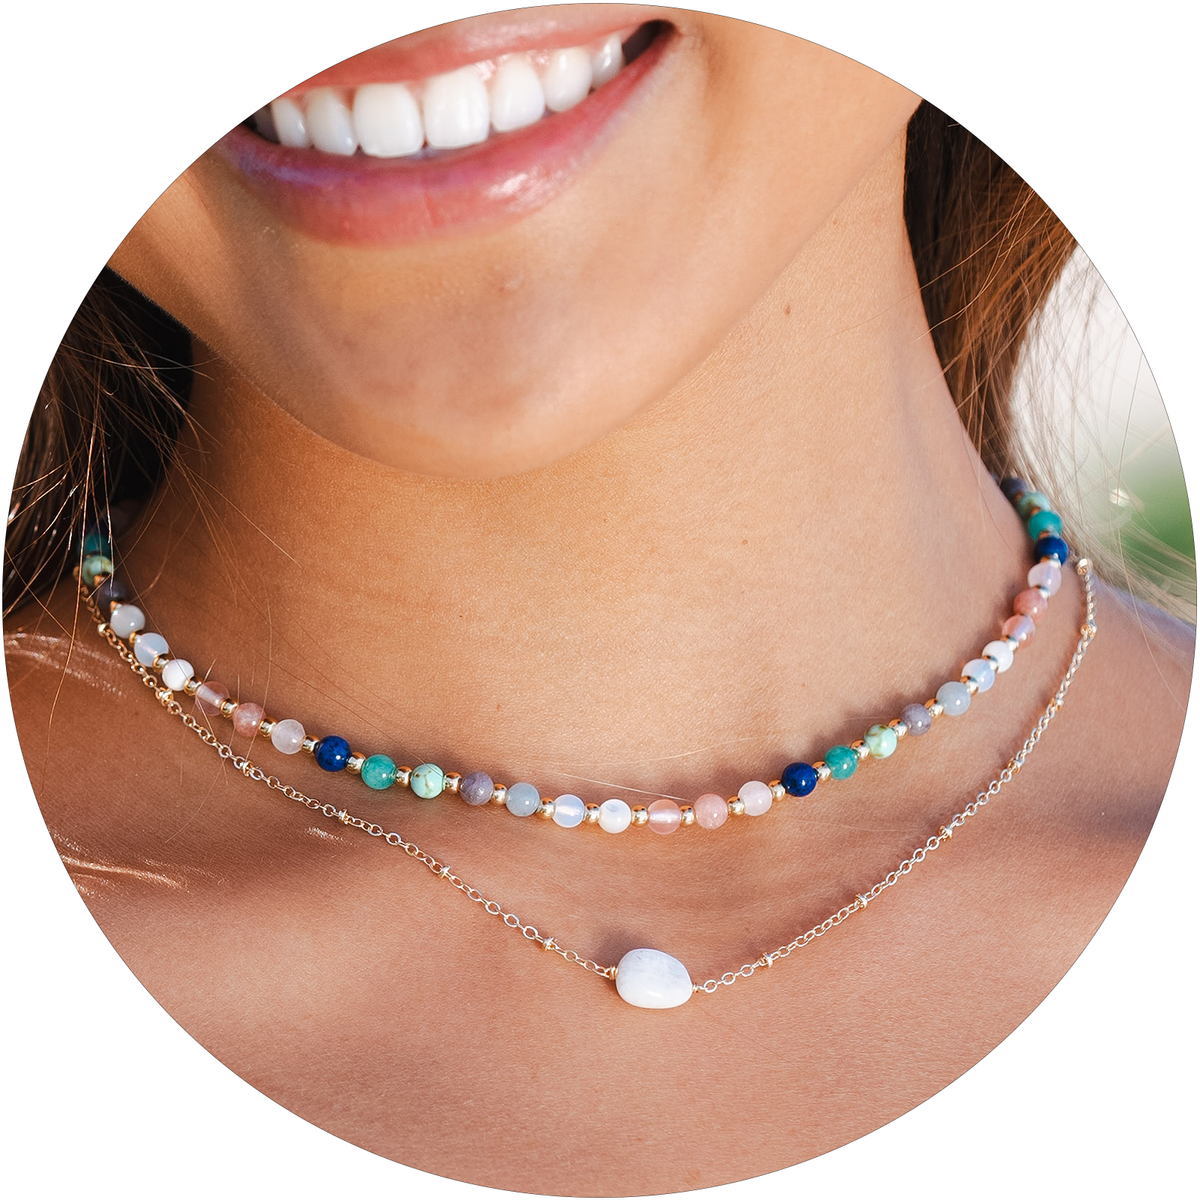 Spiritual Healer + Moonstone Necklace Stack